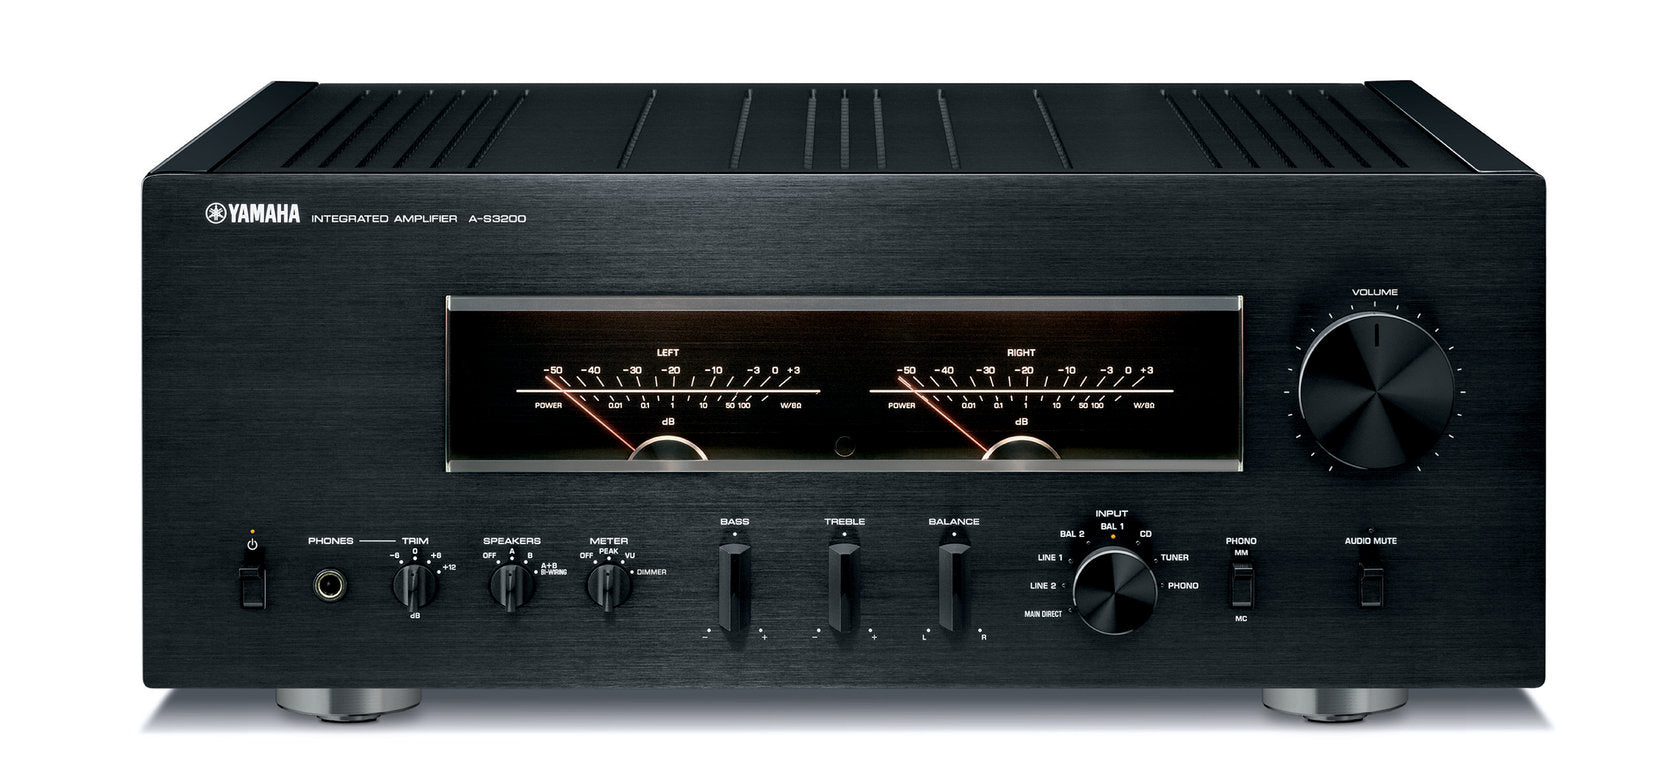 Yamaha A-S3200 stereo amplifier